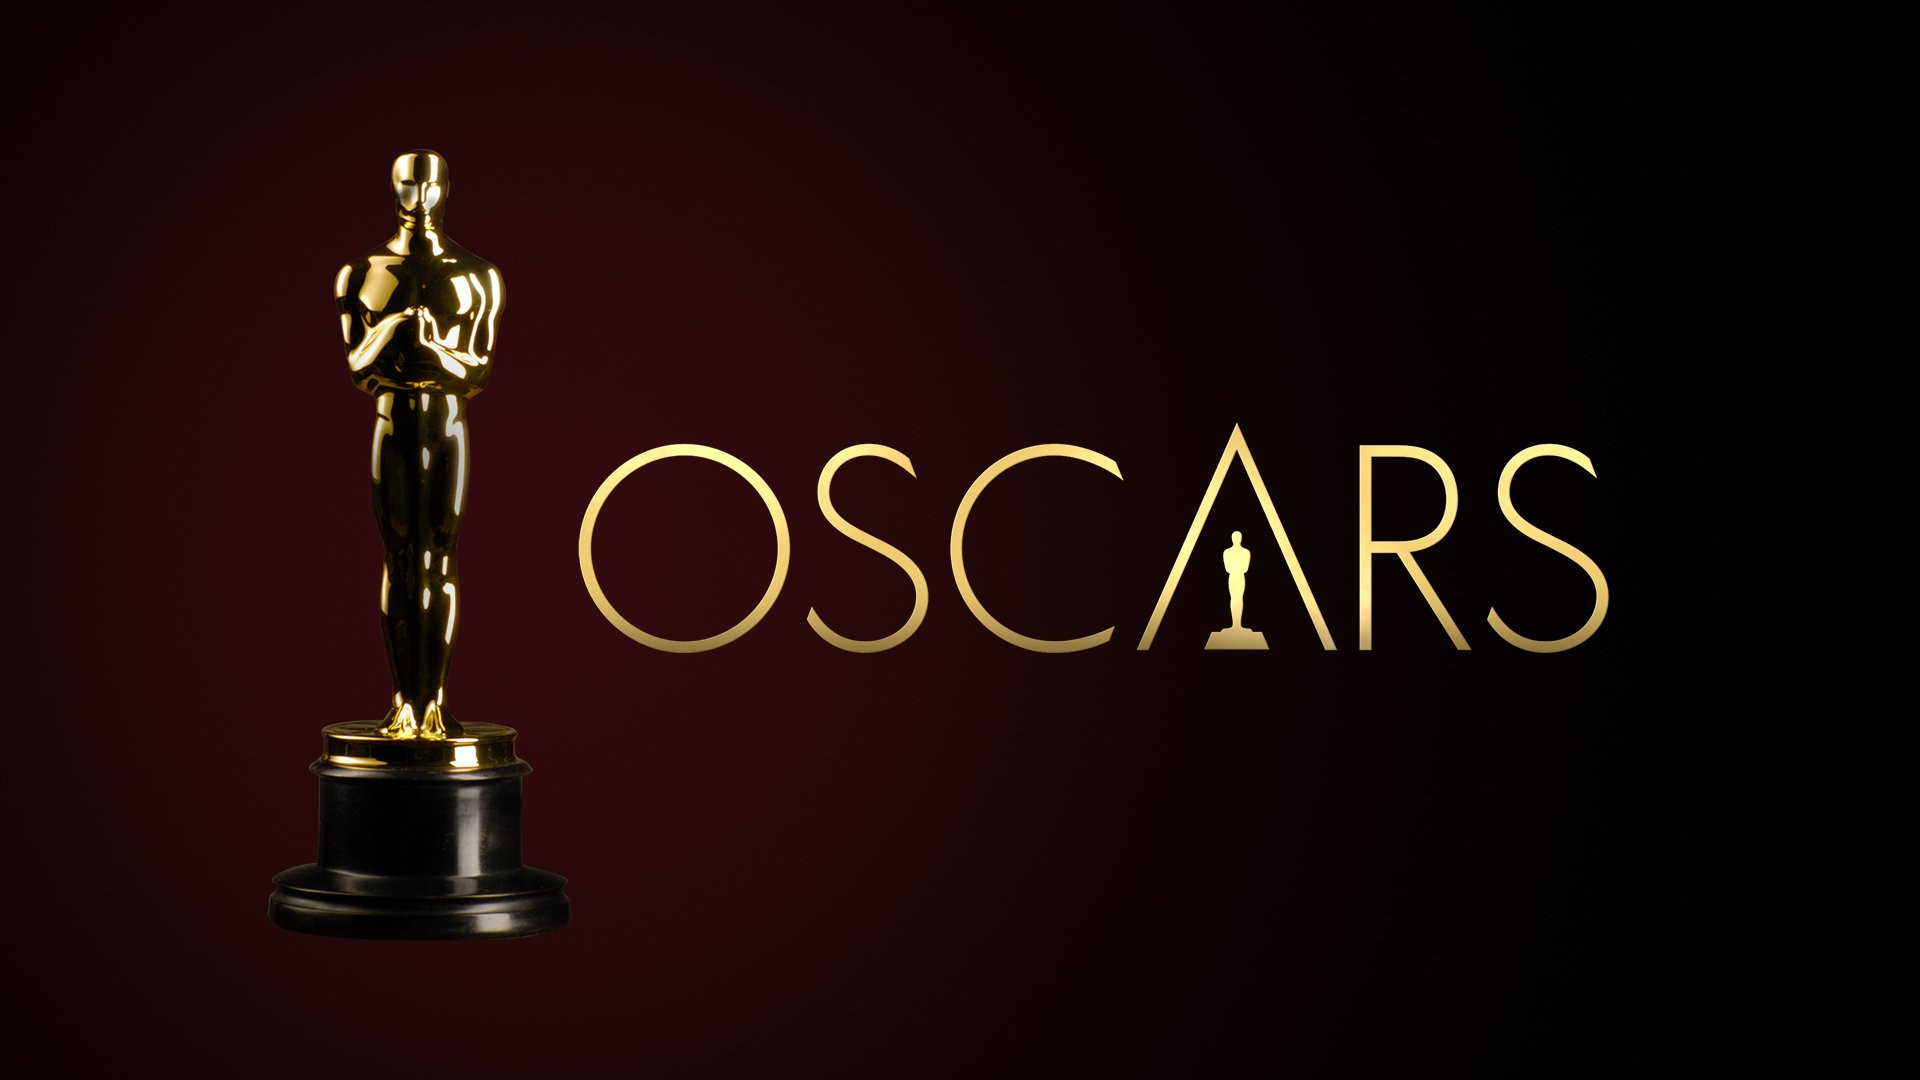 Oscars 2020 Winners: The Full List